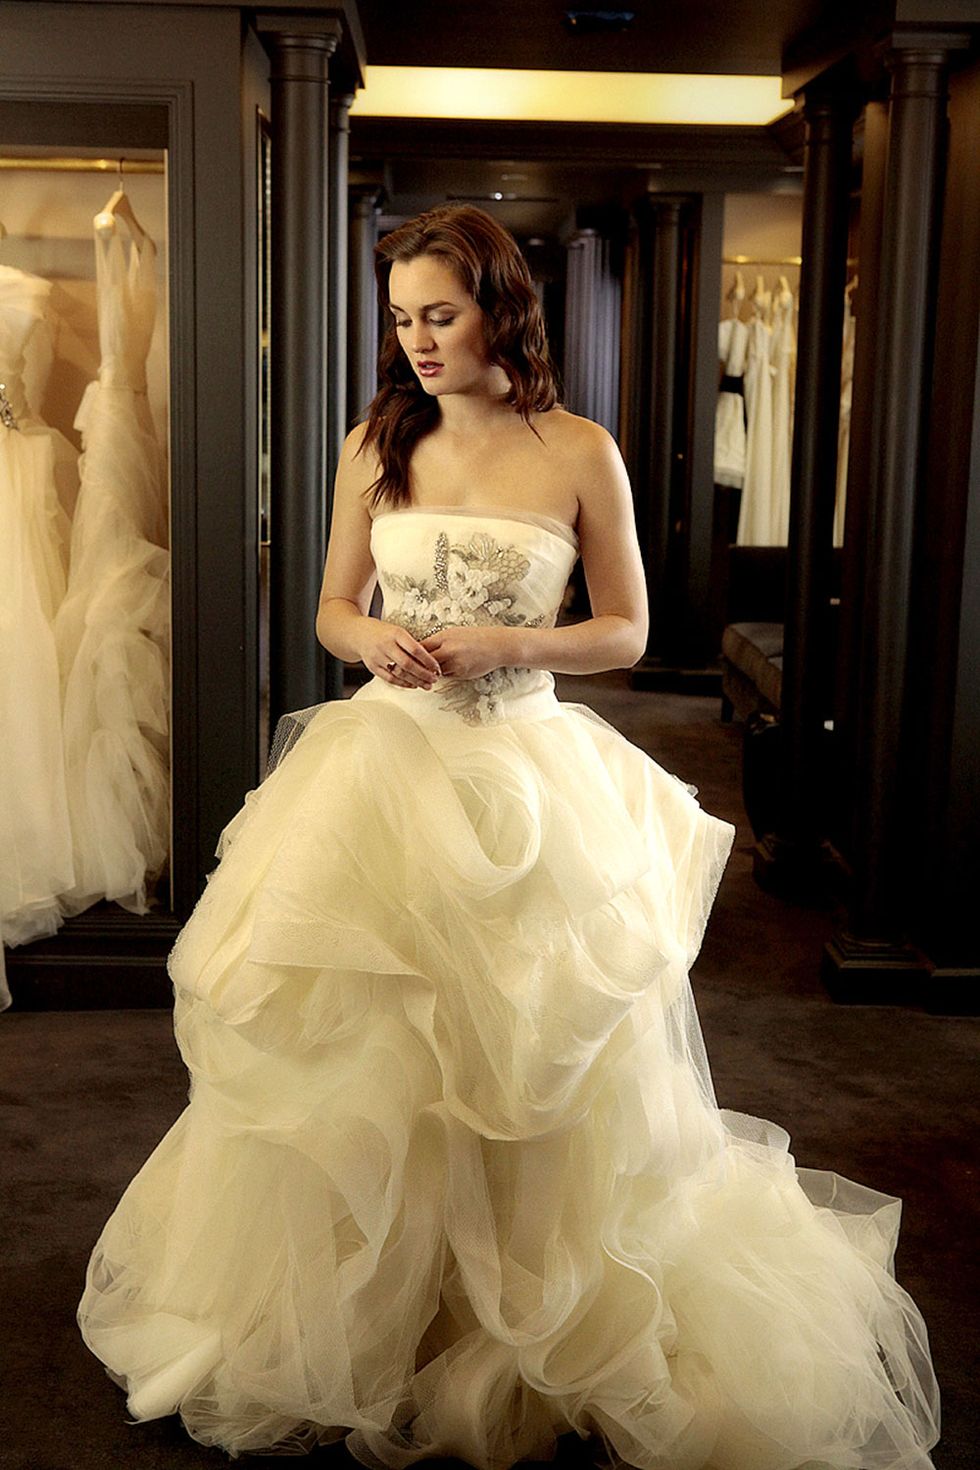 Blair Dress  Wedding flower girl dresses, Kids wedding outfits, Wedding  party outfits